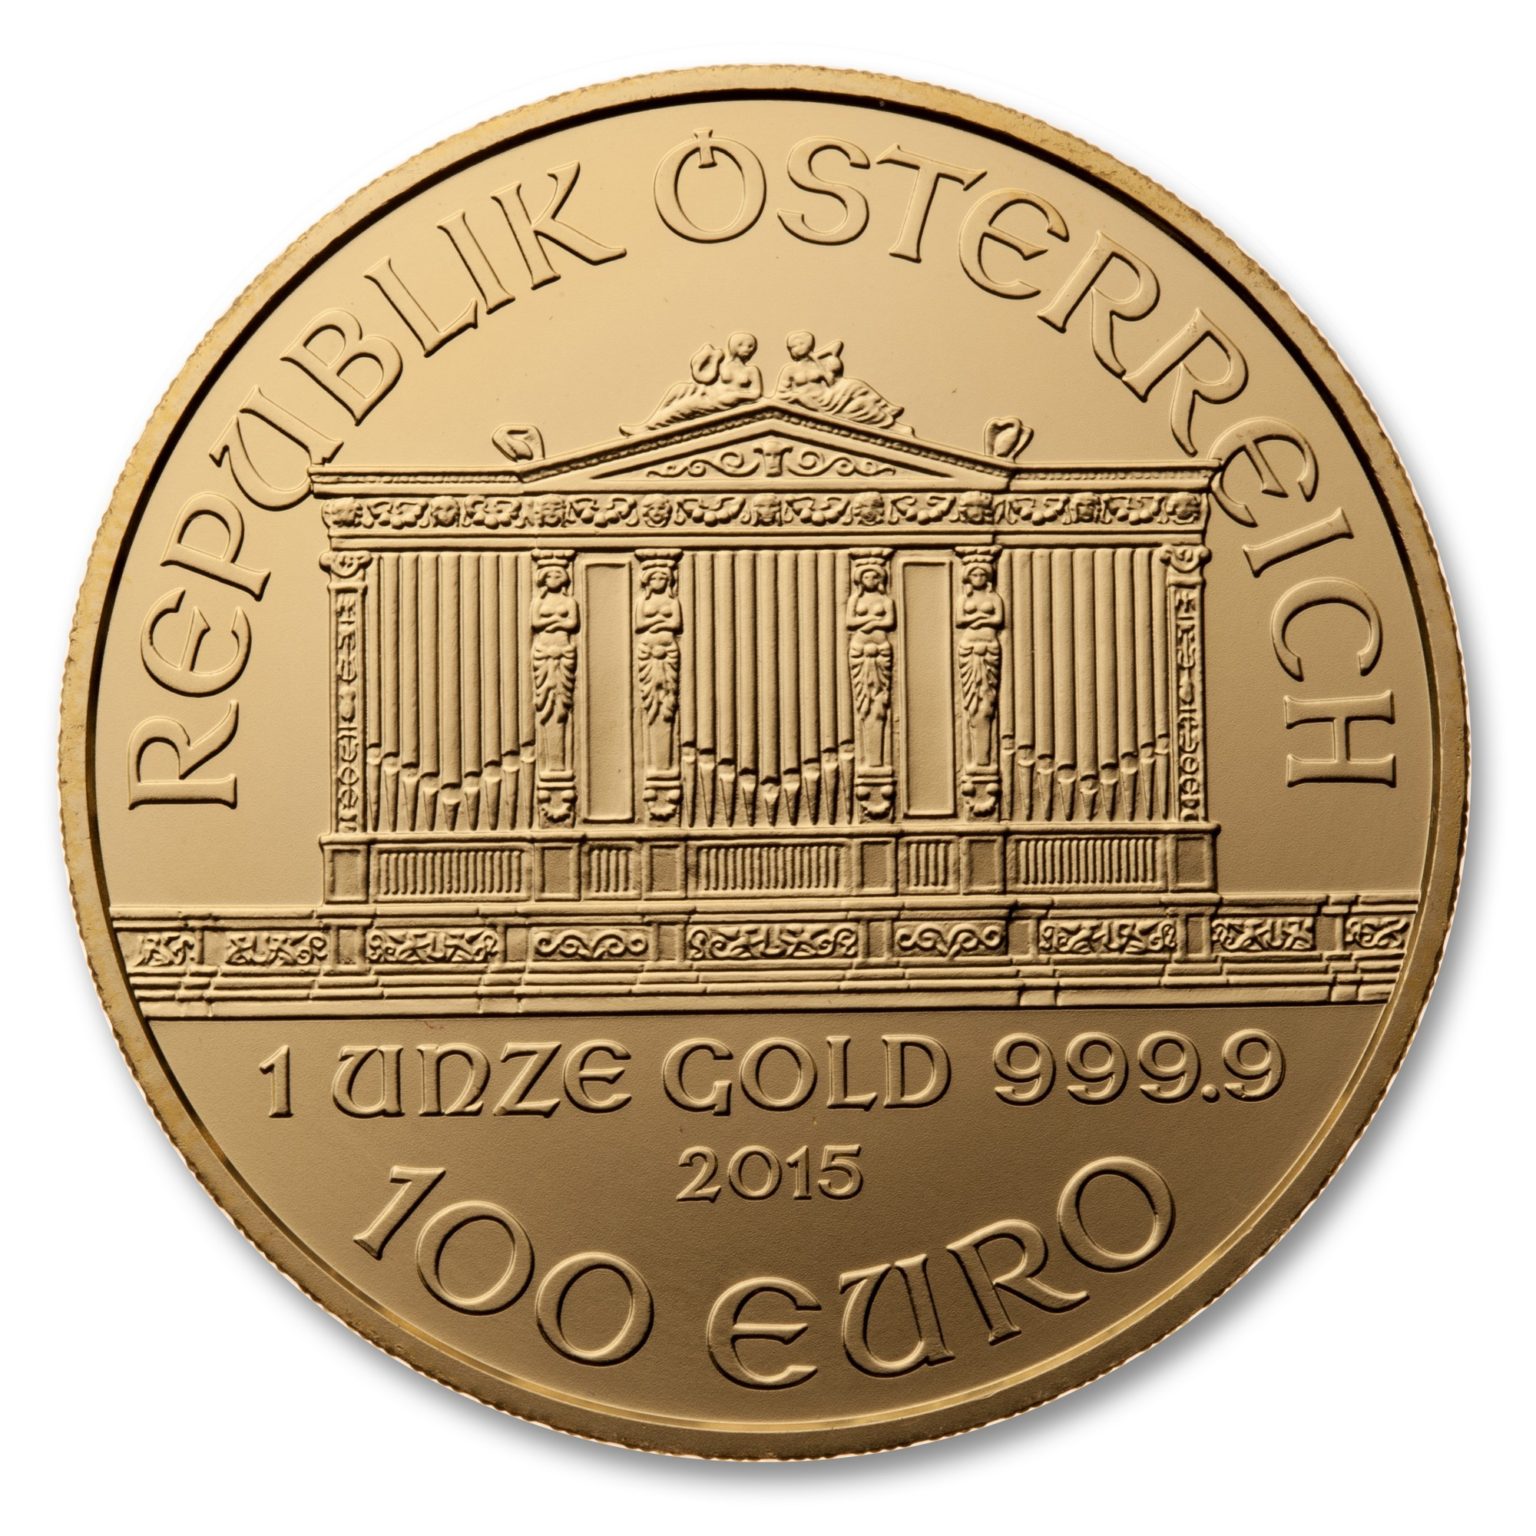 2017 AUSTRIAN GOLD PHILHARMONIC 1 oz .9999